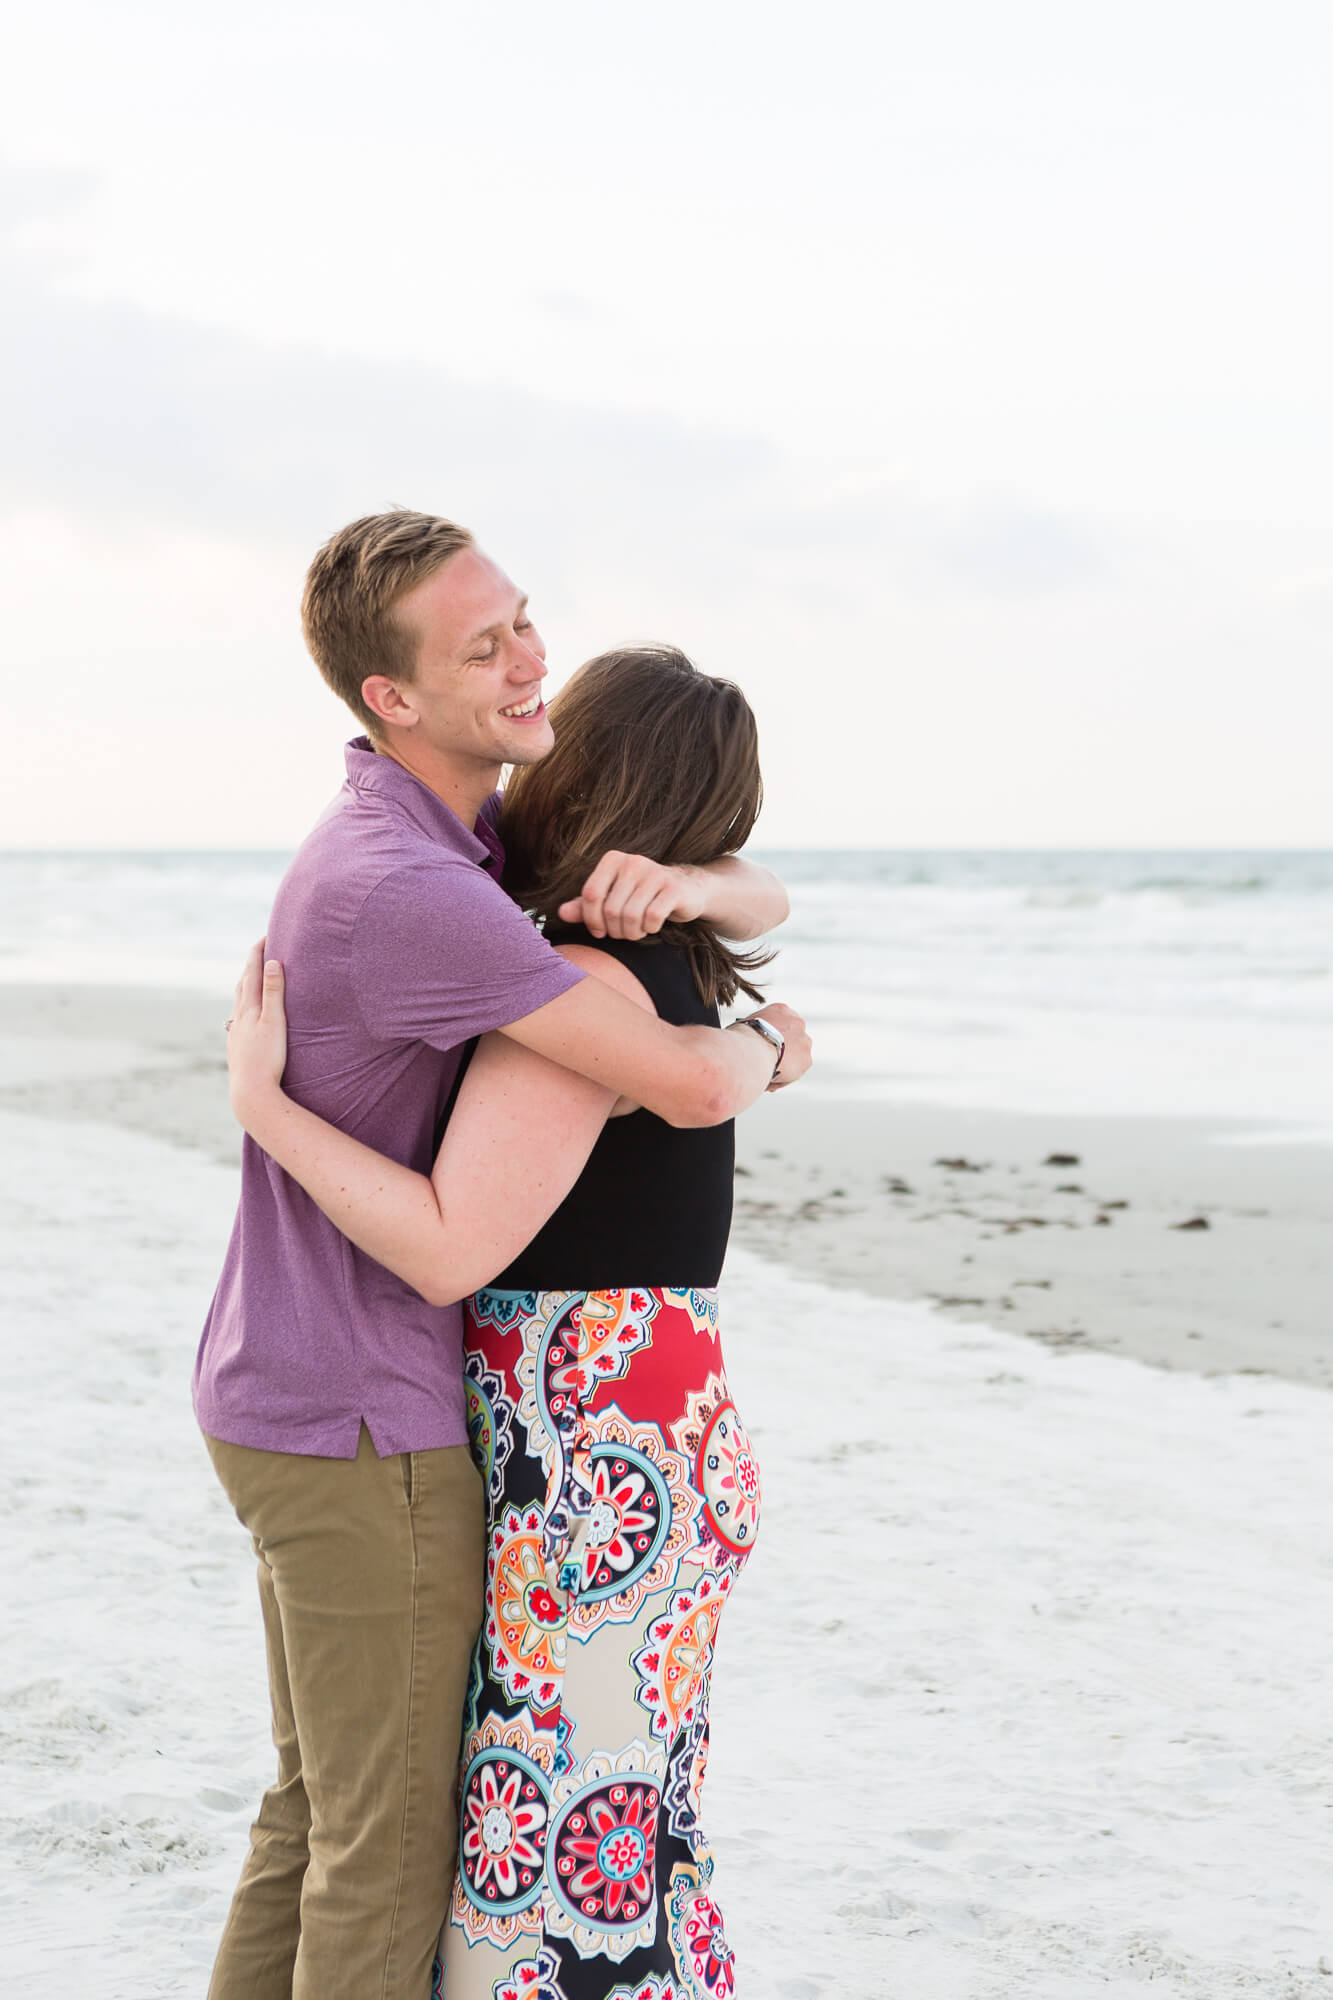  Joe proposing to Emily on Florida's New Smyrna Beach 